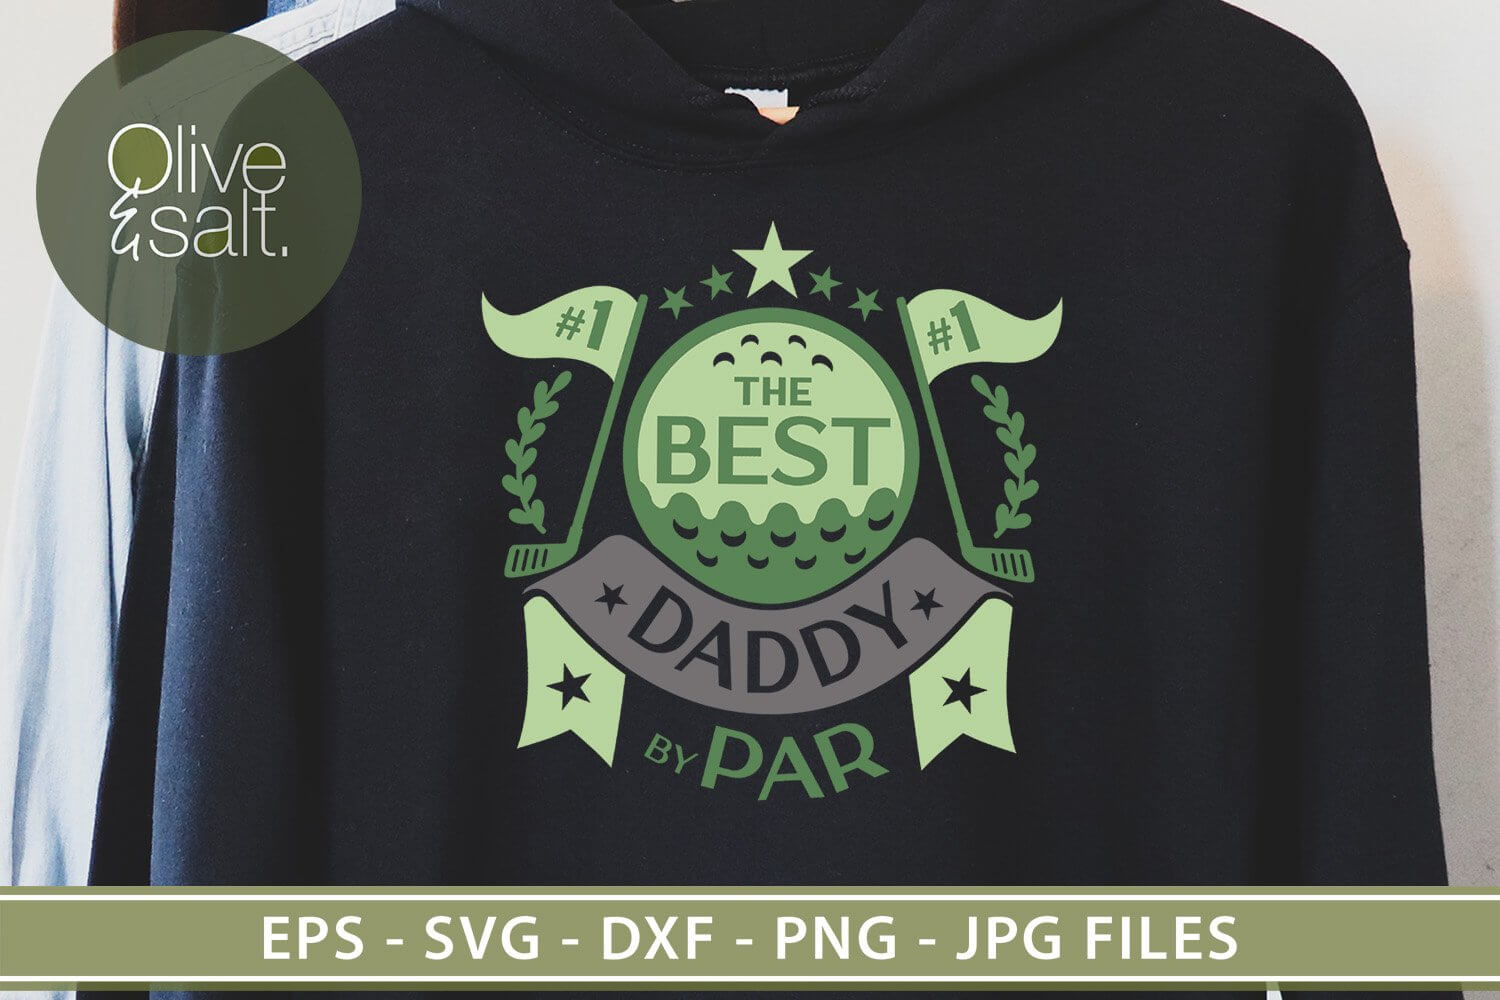 Black sweatshirt with green "The Best Daddy by Par" logo.